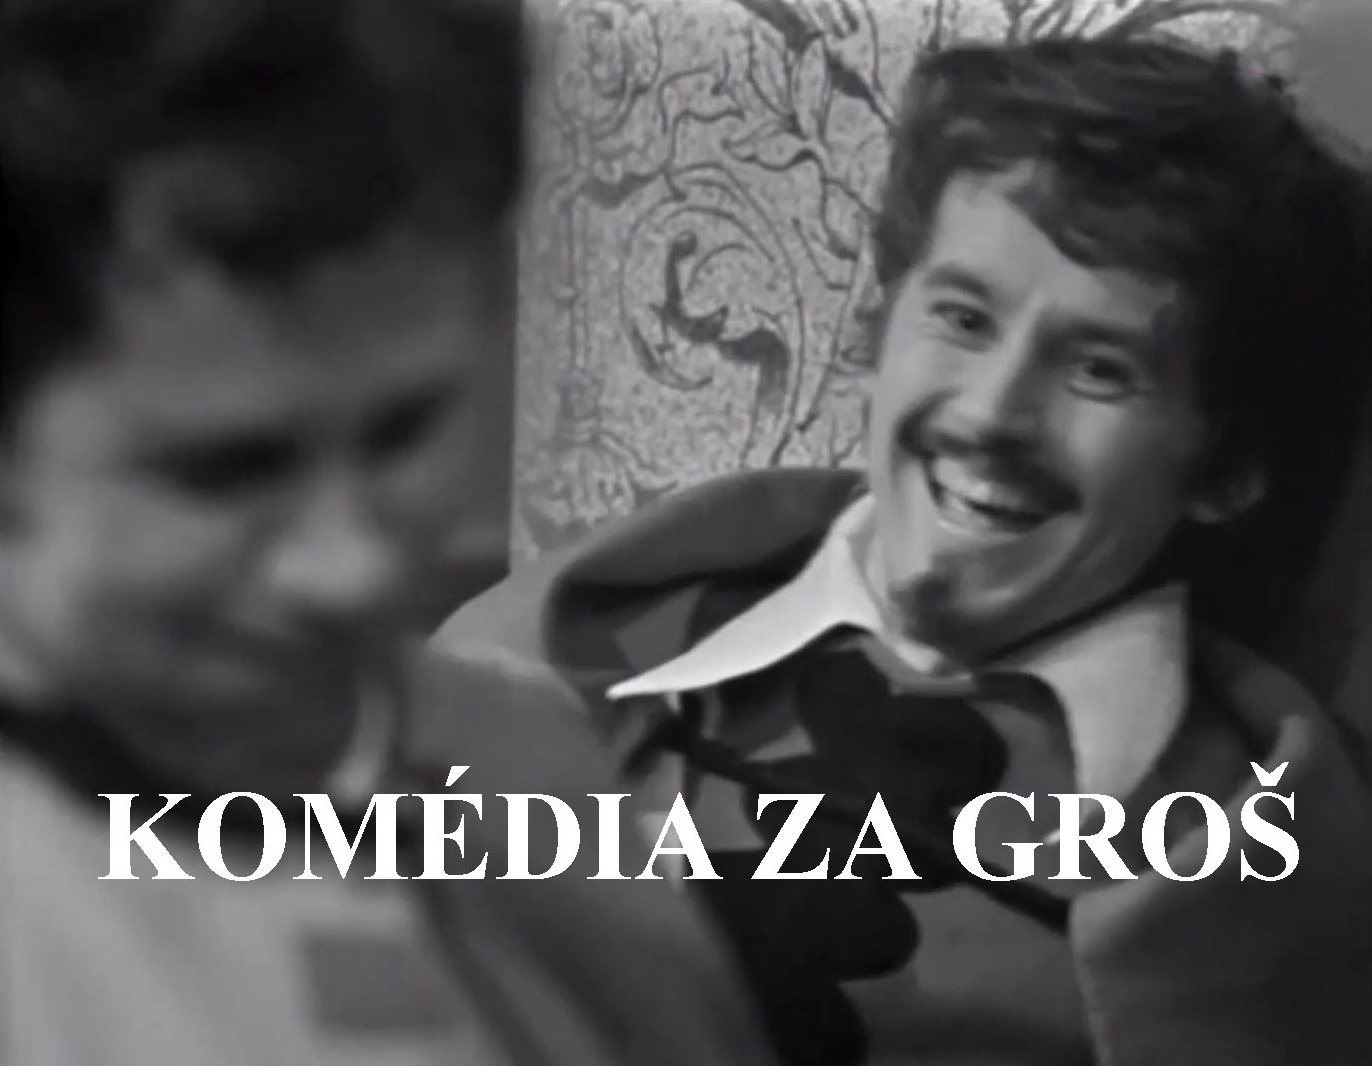 Stiahni si Filmy CZ/SK dabing Komedia za gros (1975)(SK)[TvRip] = CSFD 53%